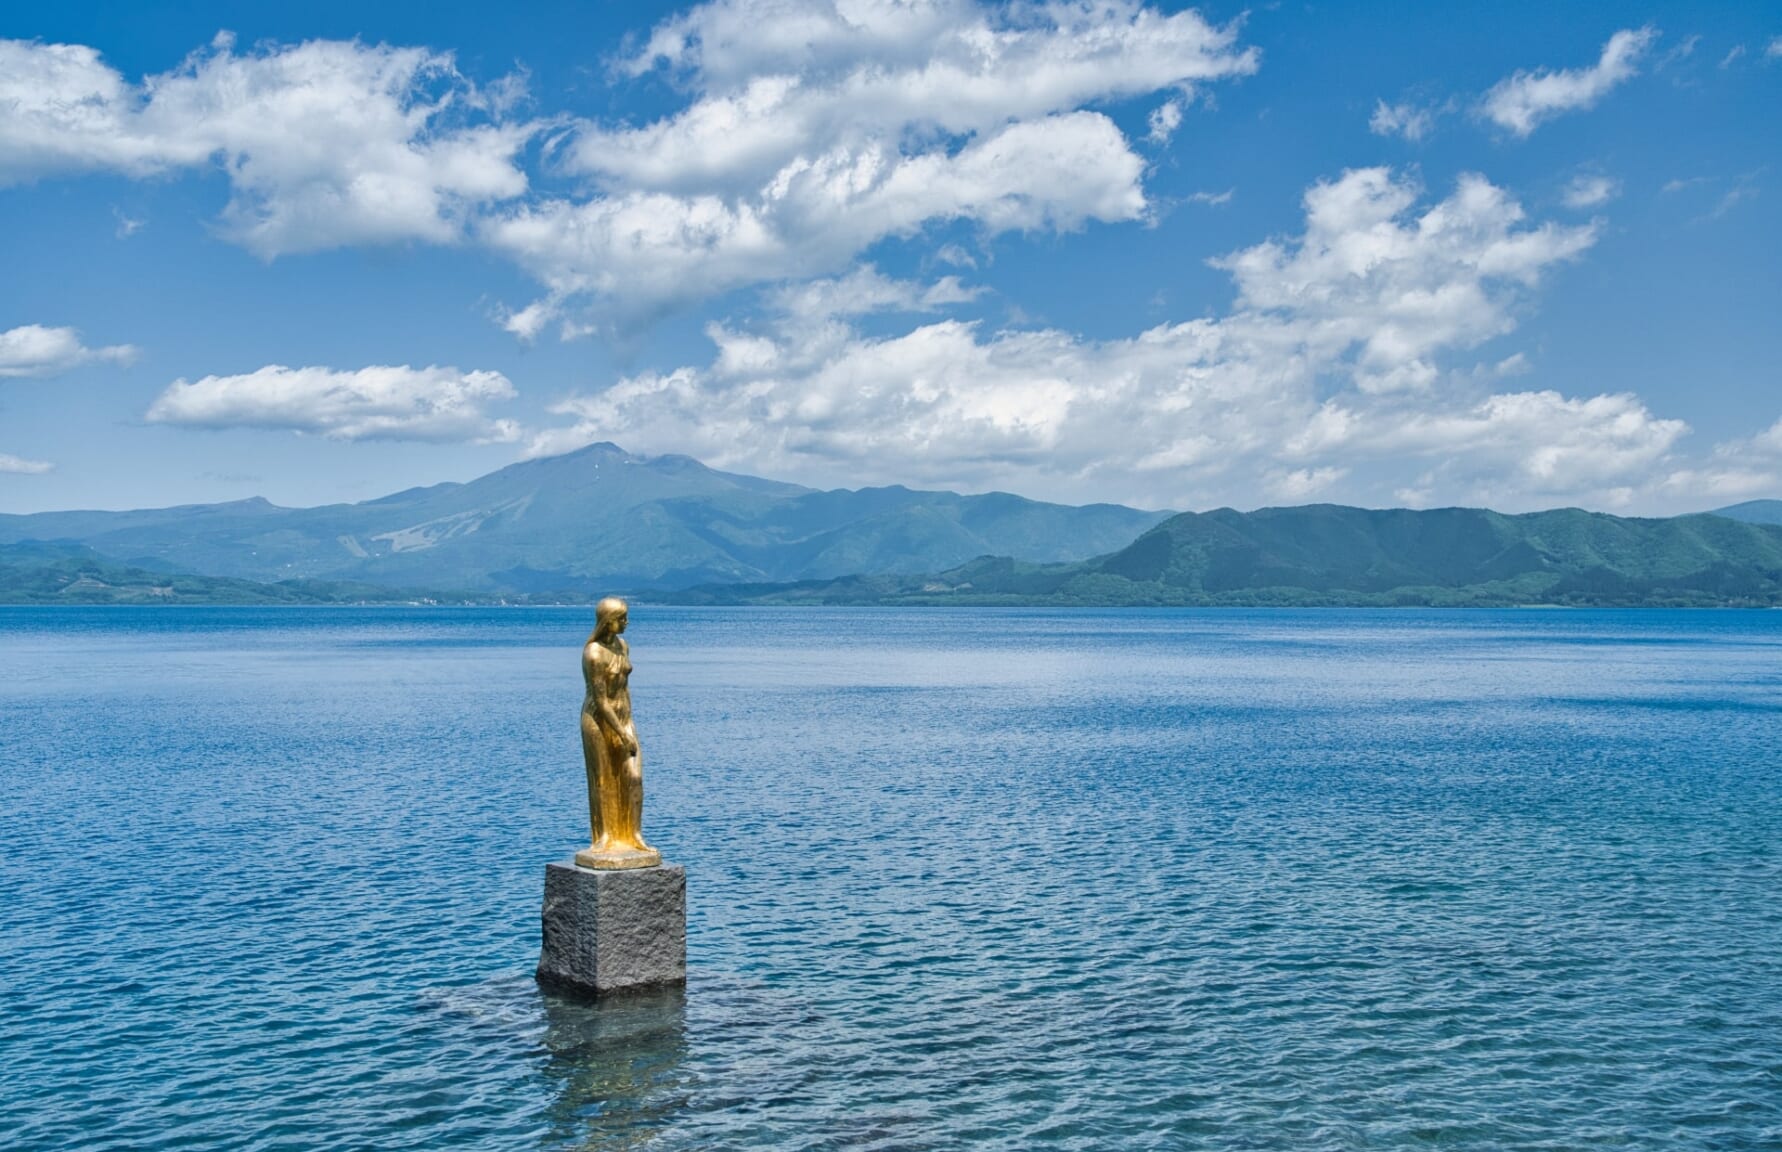 maiden Tatsuko at Lake Tazawa